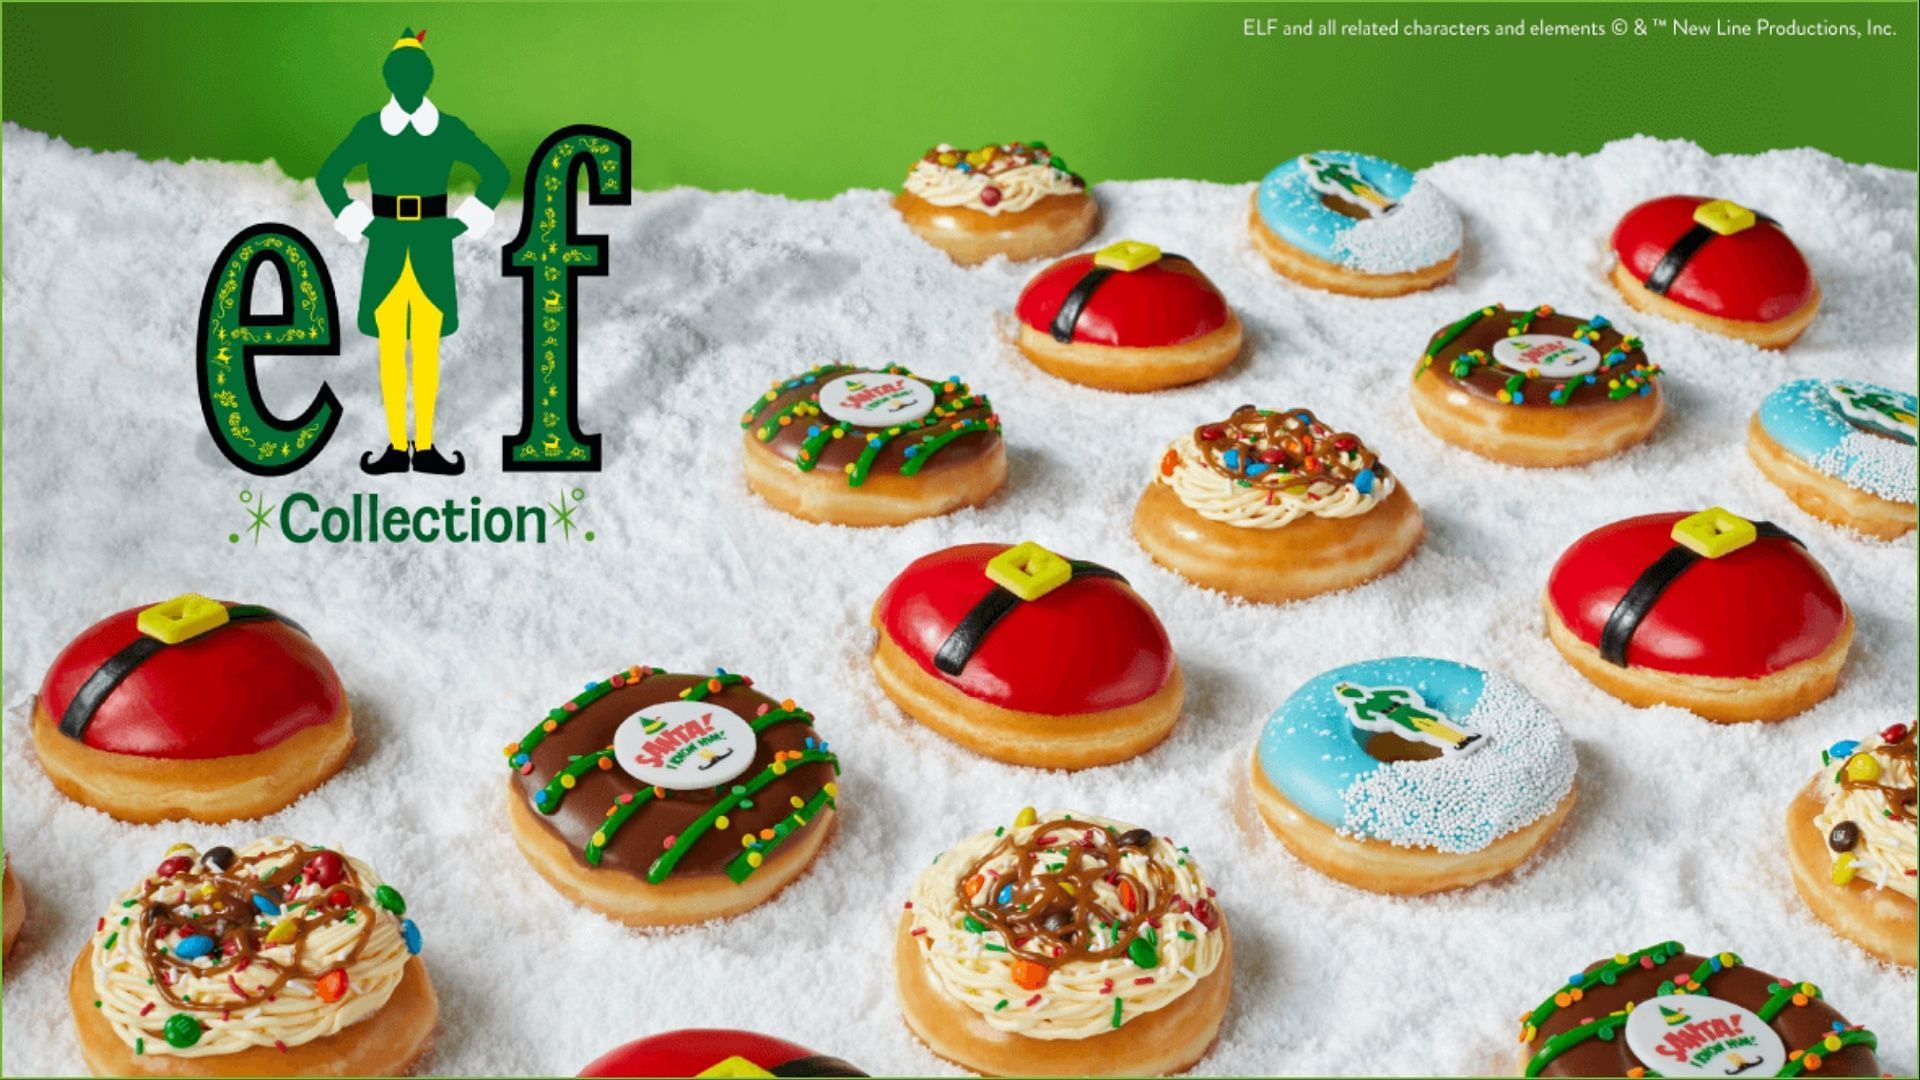 The new Elf-inspired holiday doughnuts hit stores on November 24 (Image via Krispy Kreme)